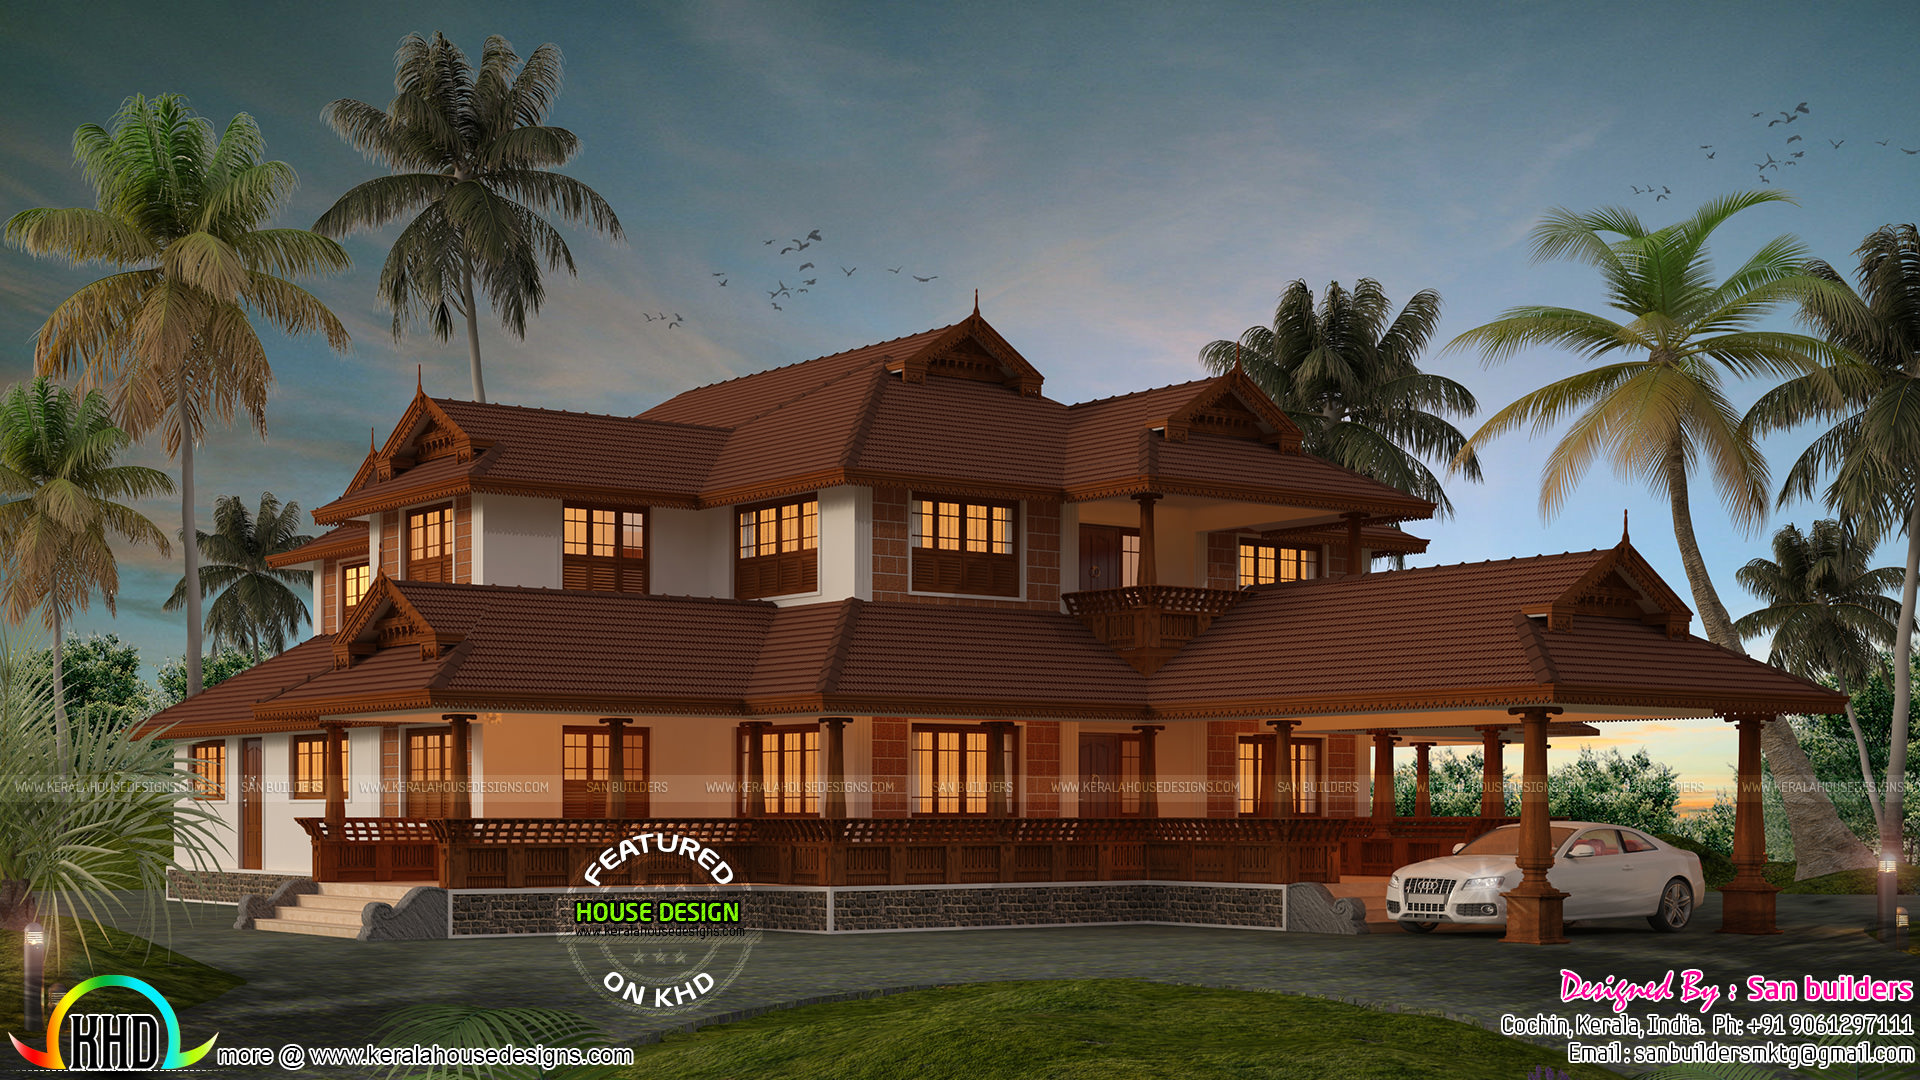  Traditional Kerala home for year 2019 Kerala home design 